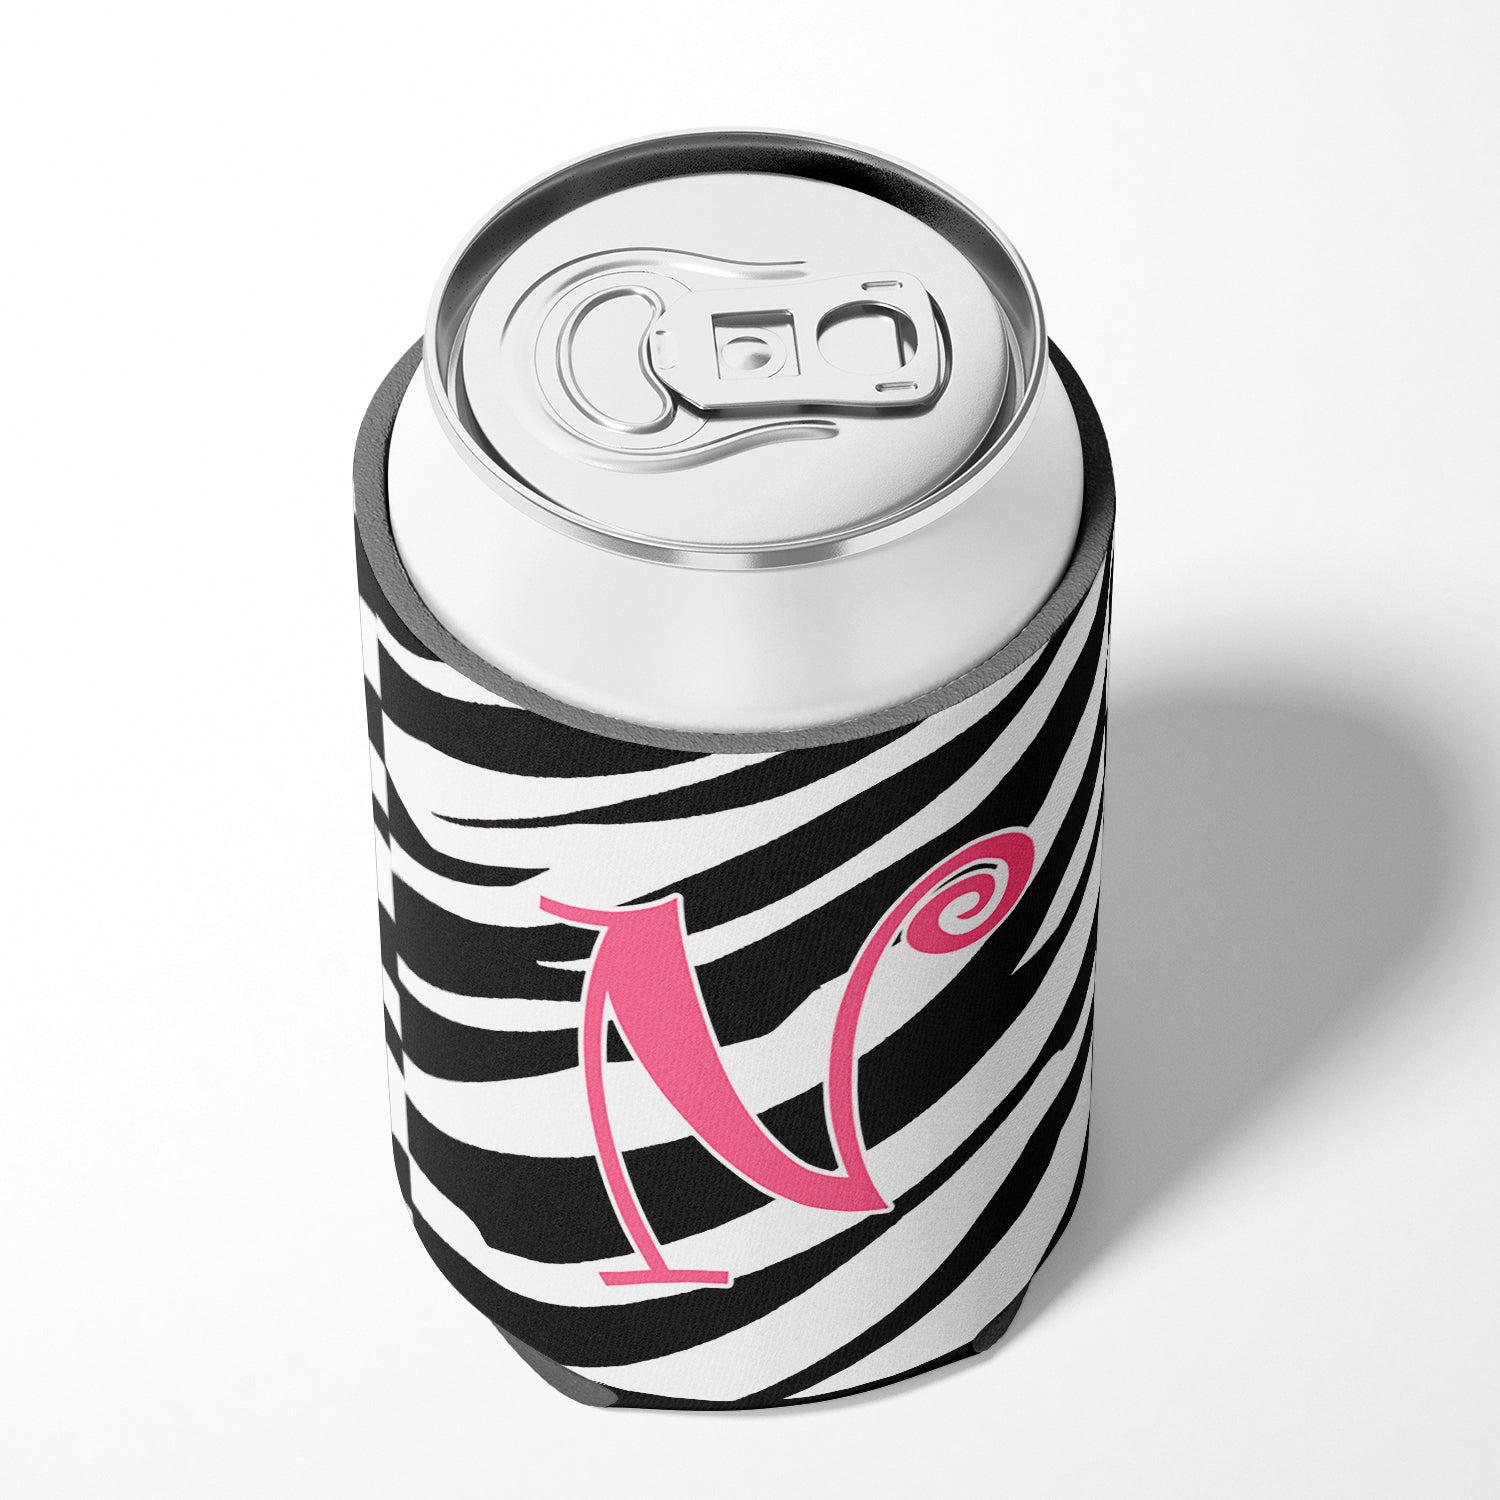 Letter N Initial Monogram - Zebra Stripe and Pink Can or Bottle Beverage Insulator Hugger